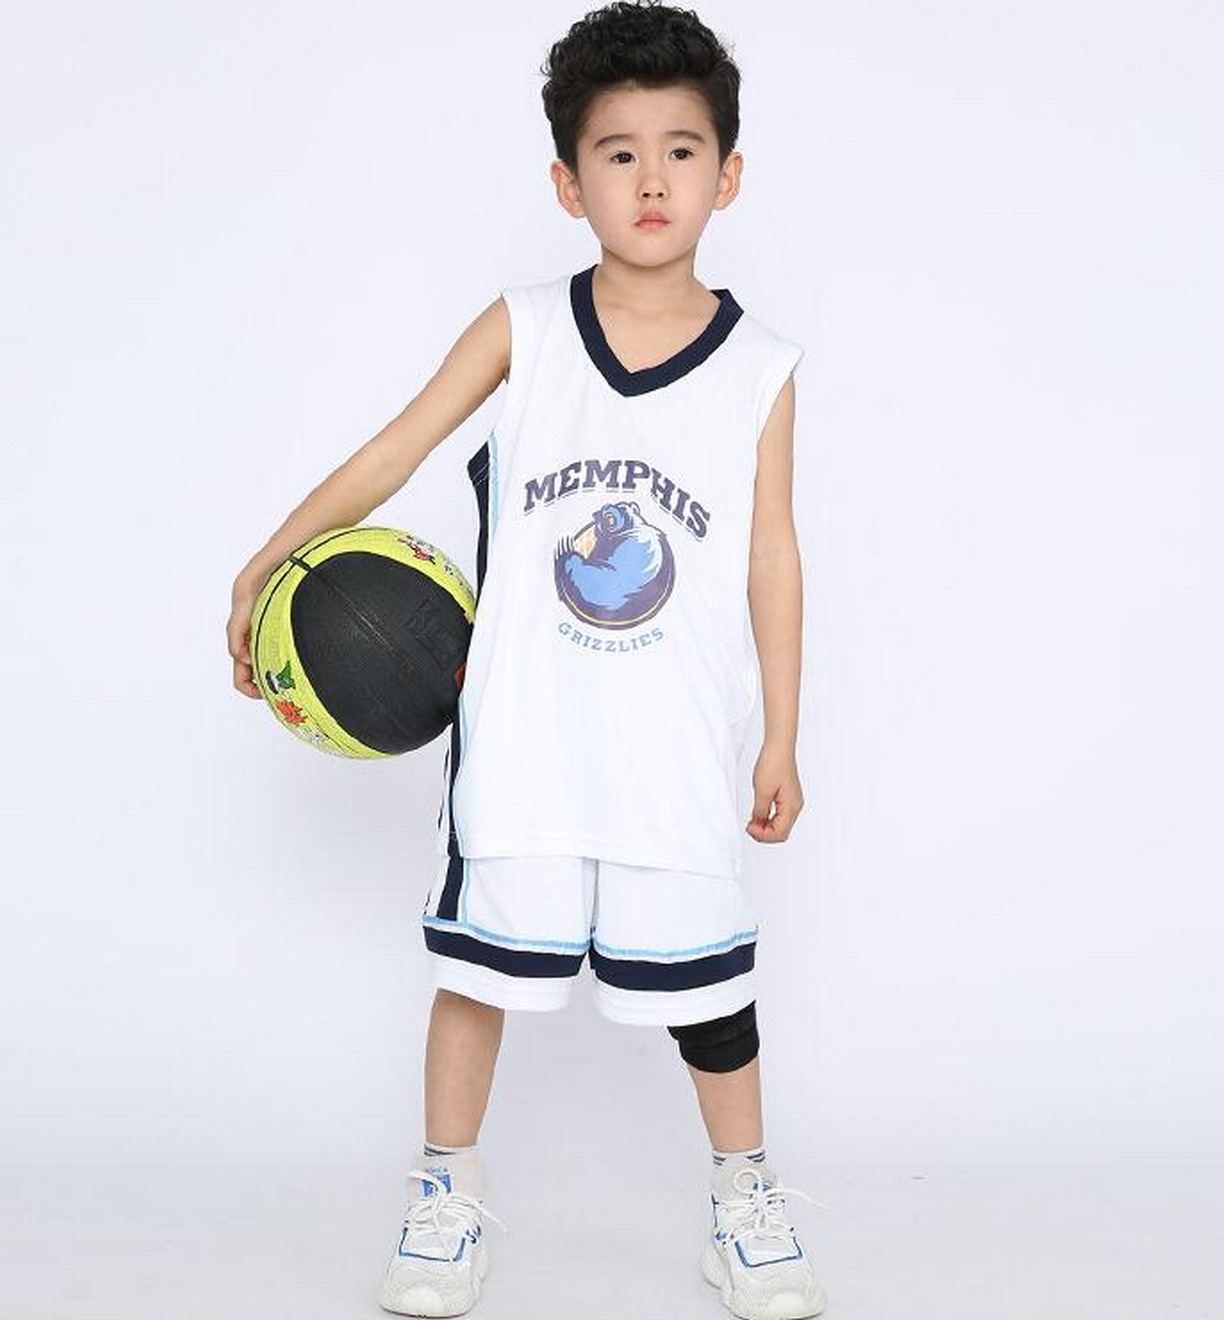 Children's sports clothing customized personalized sportswear quick-dry sportswear665